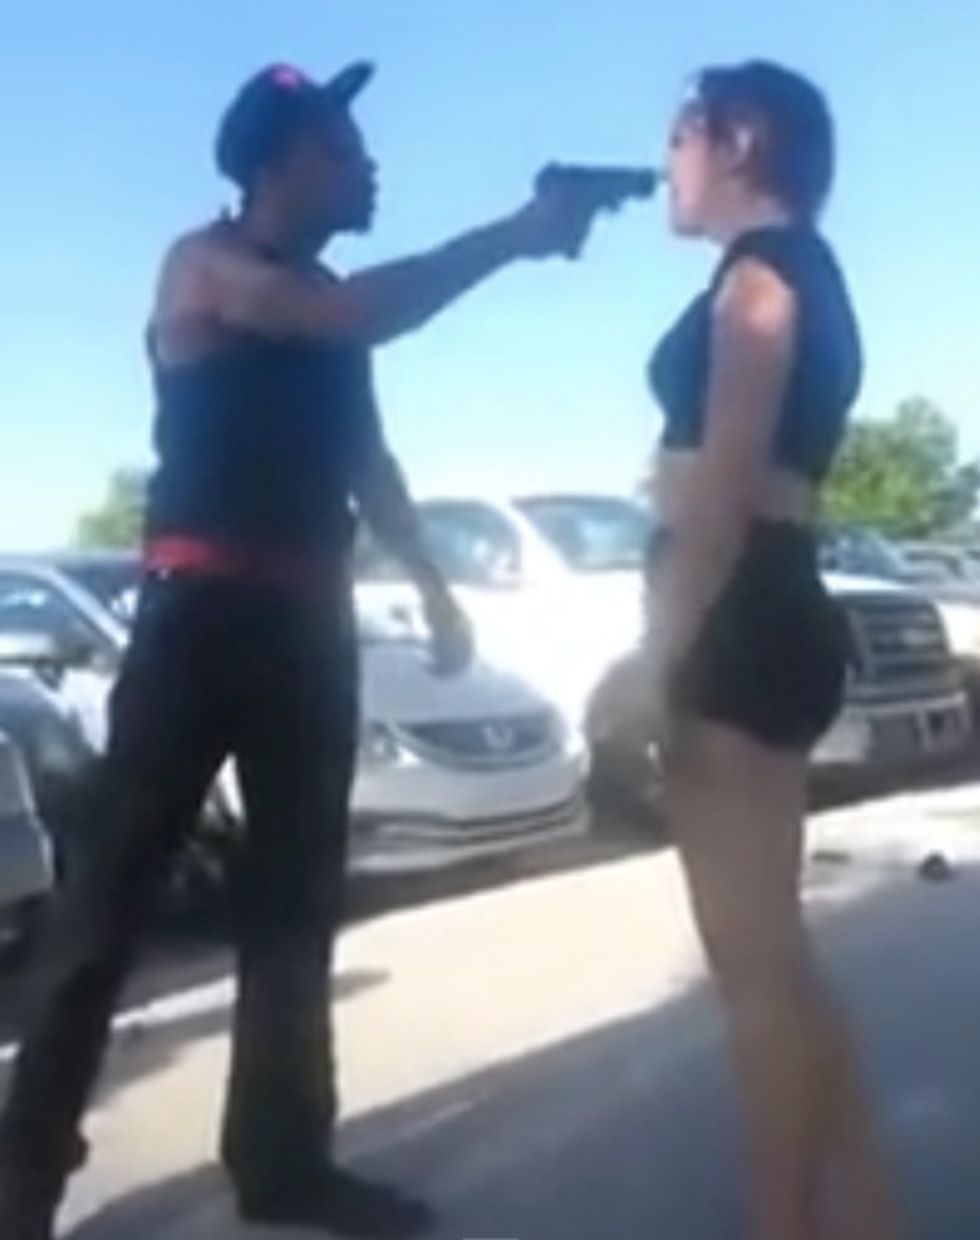 Terrifying Video: Man Sticks a Gun in Two Women's Faces During an Argument at a Public Park